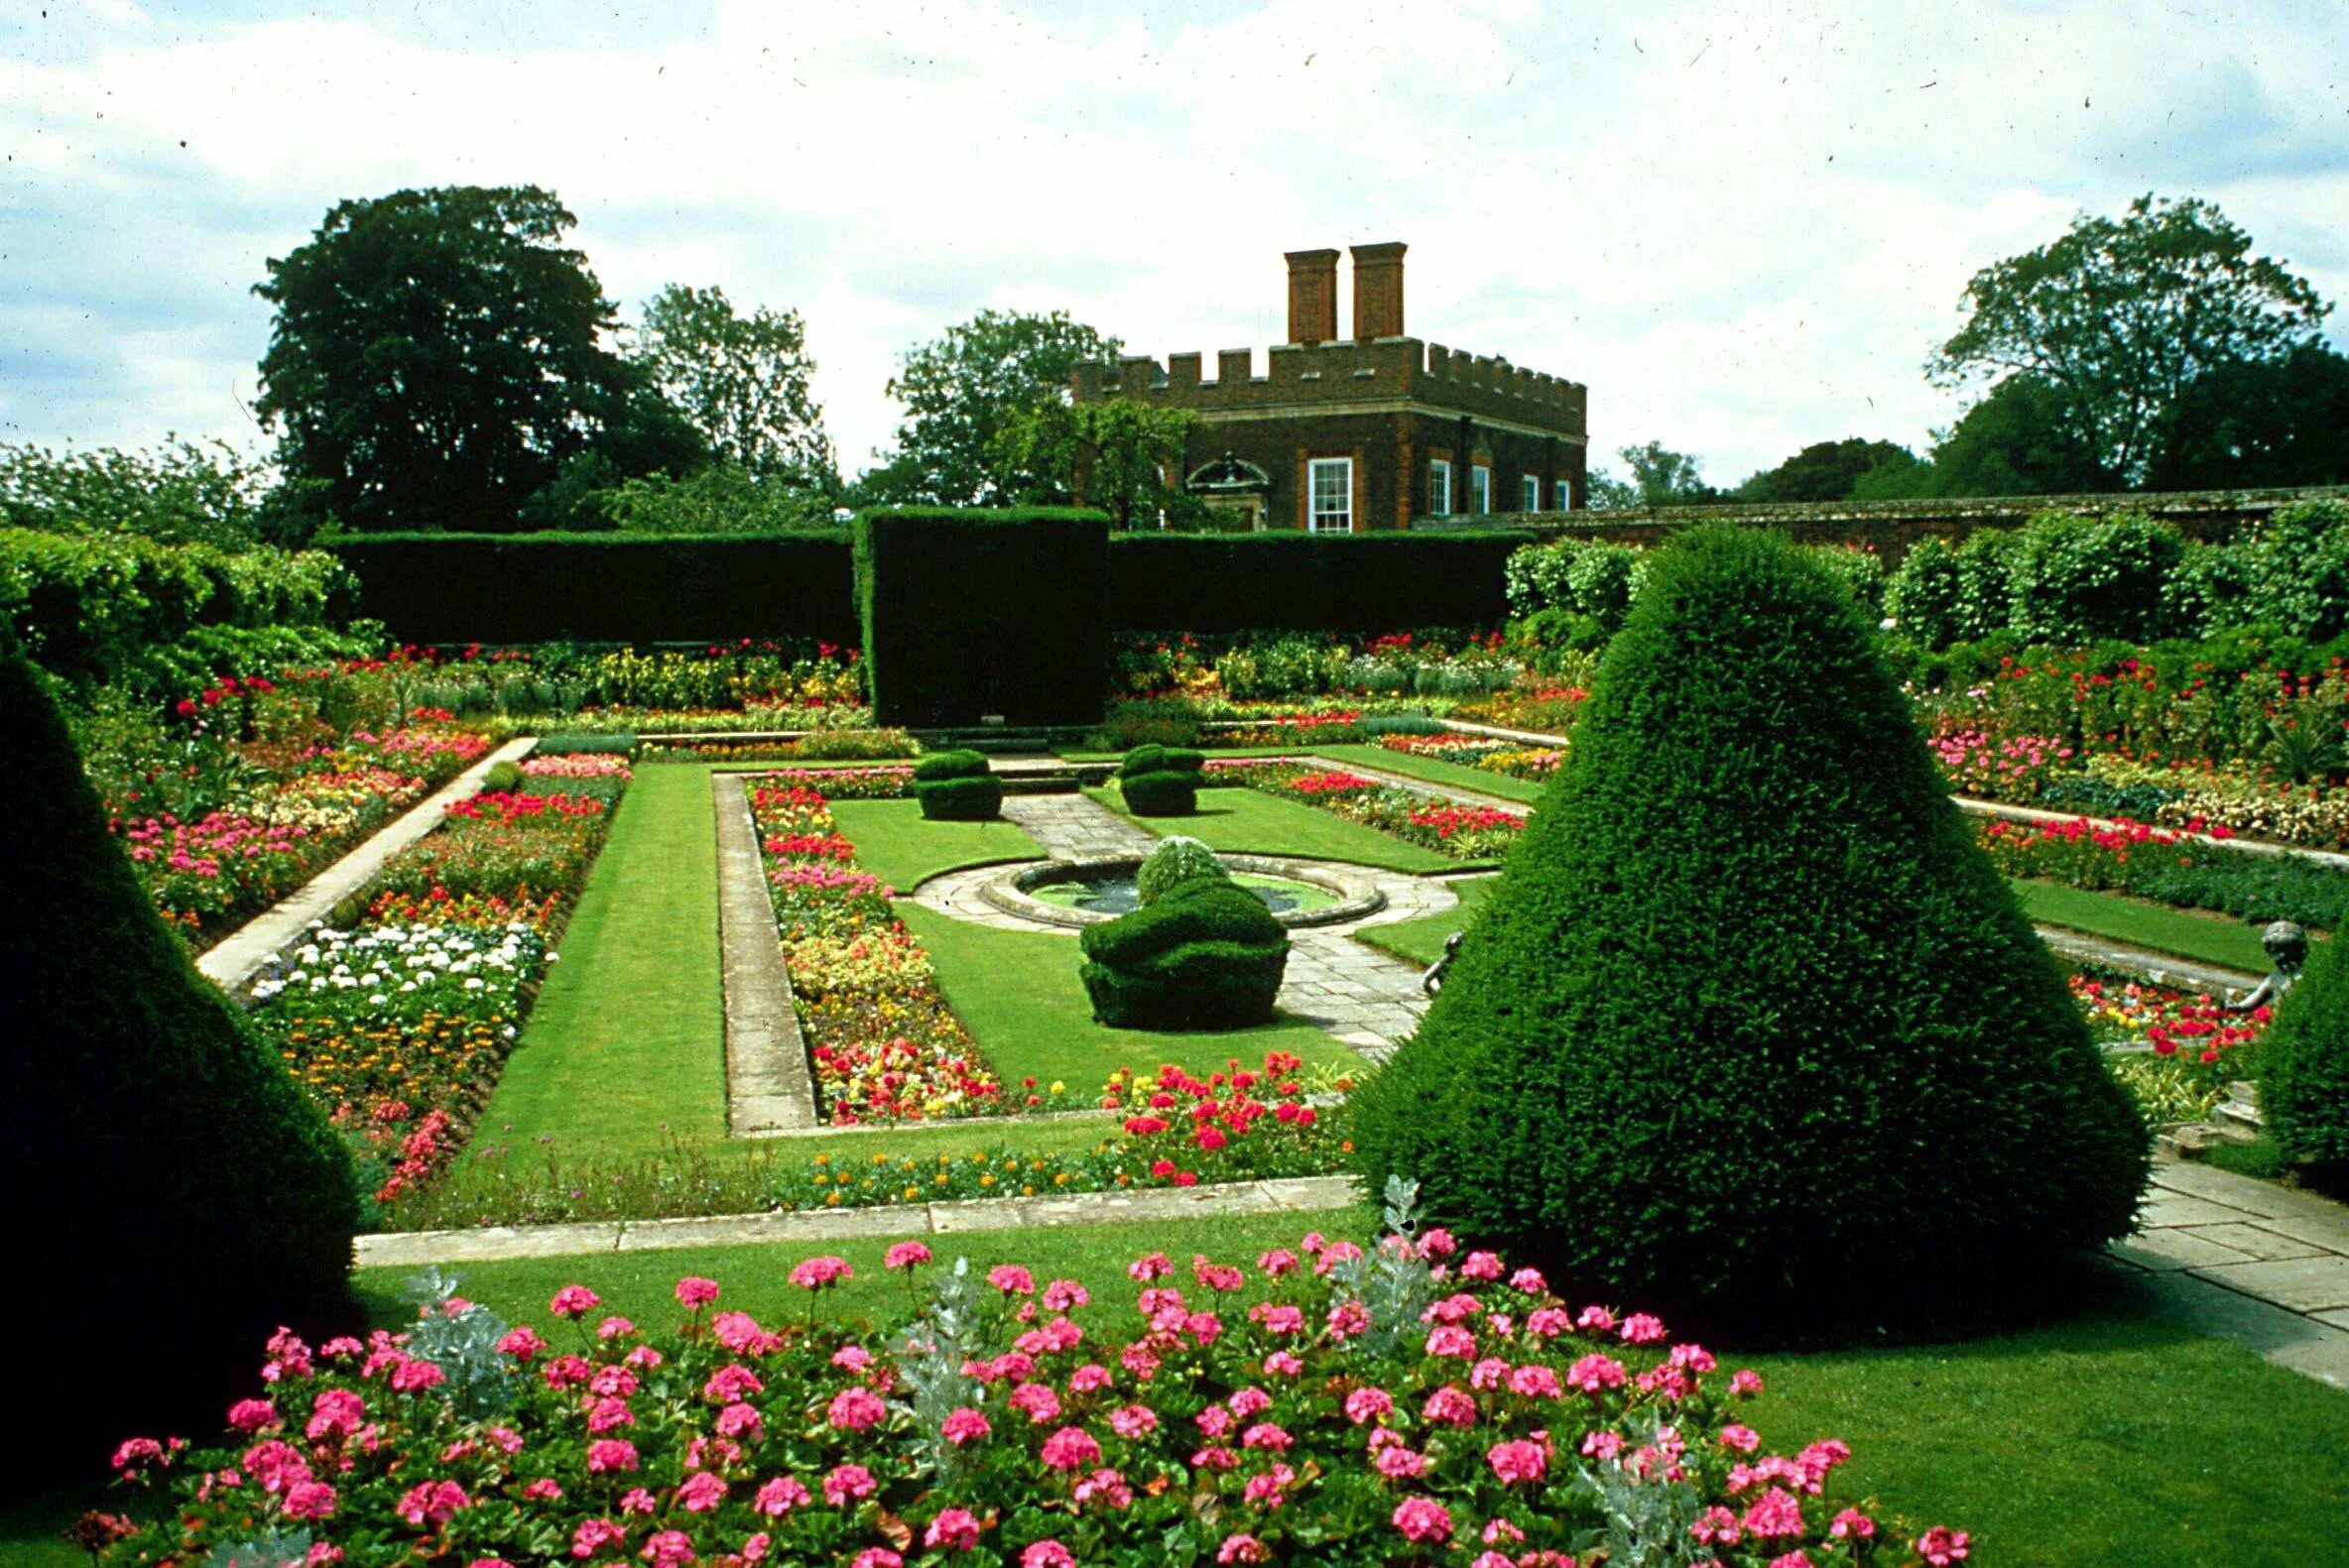 Сады дворца Хэмптон корт в Англии. Сад дворца Хэмптон-корт. Хэмптон корт парки. Садово-Парковое искусство Англии. Парк Хэмптон-корт.